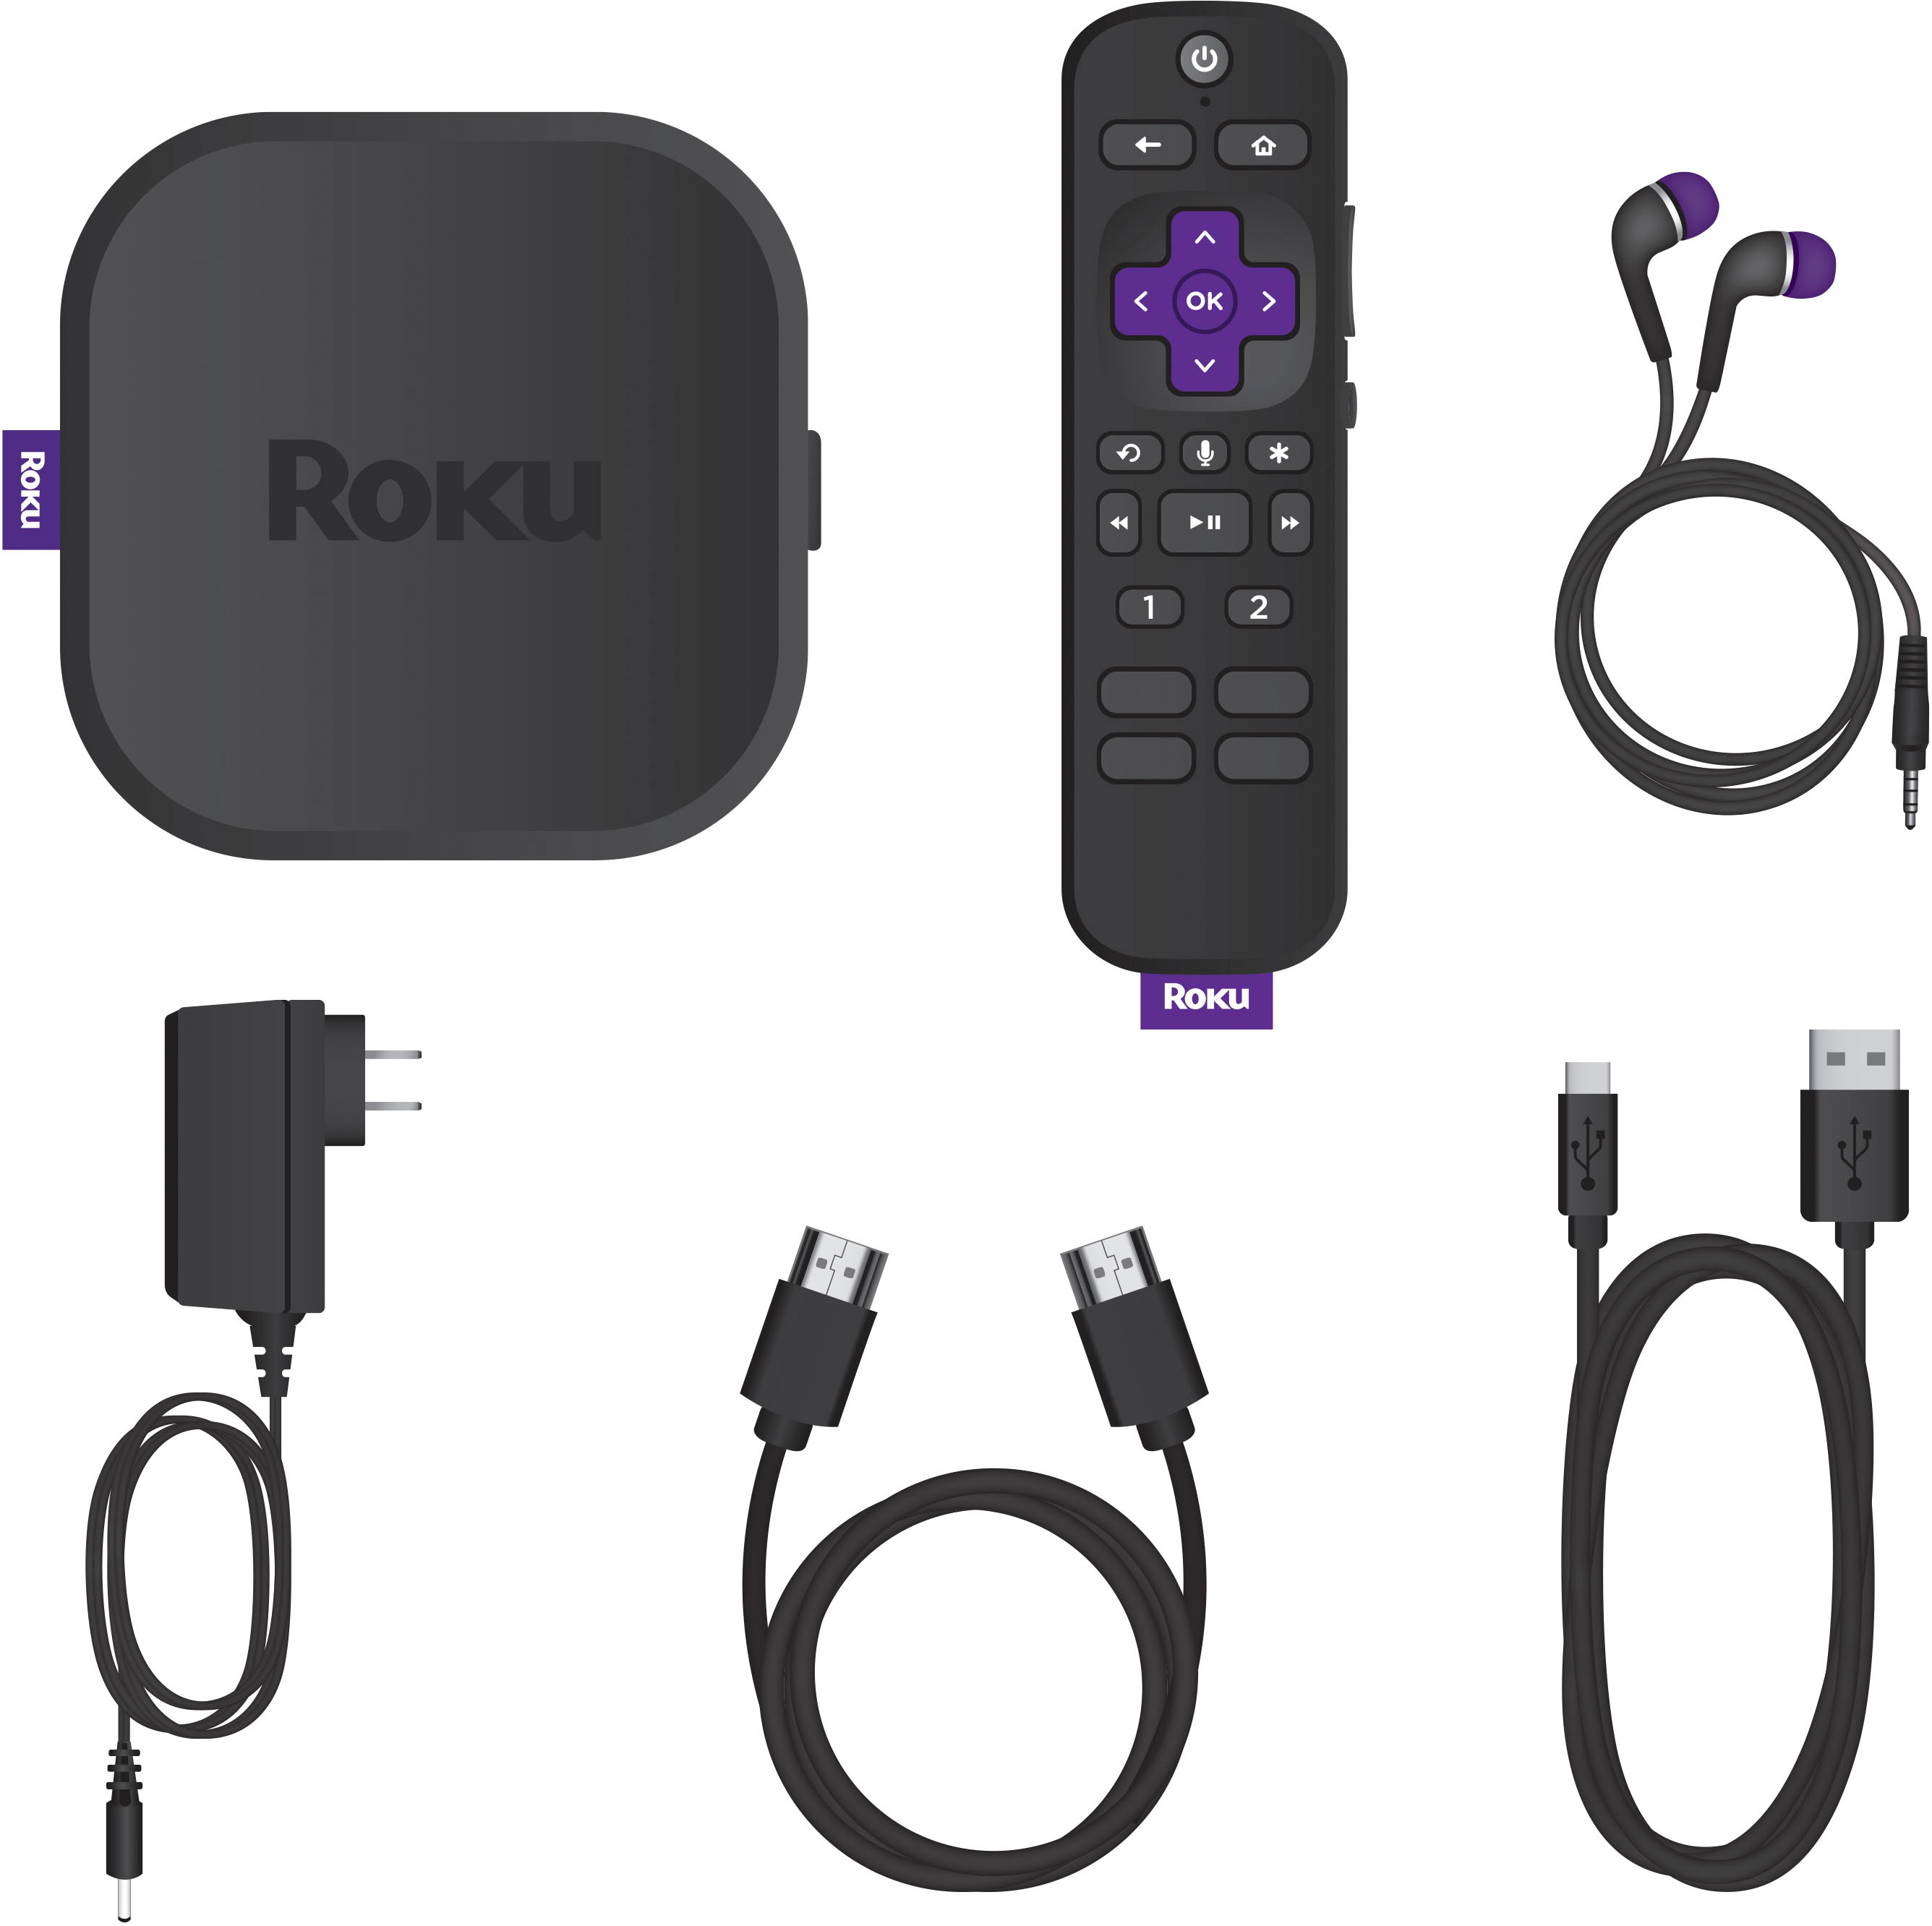 Roku 4 U: picking the perfect Roku device